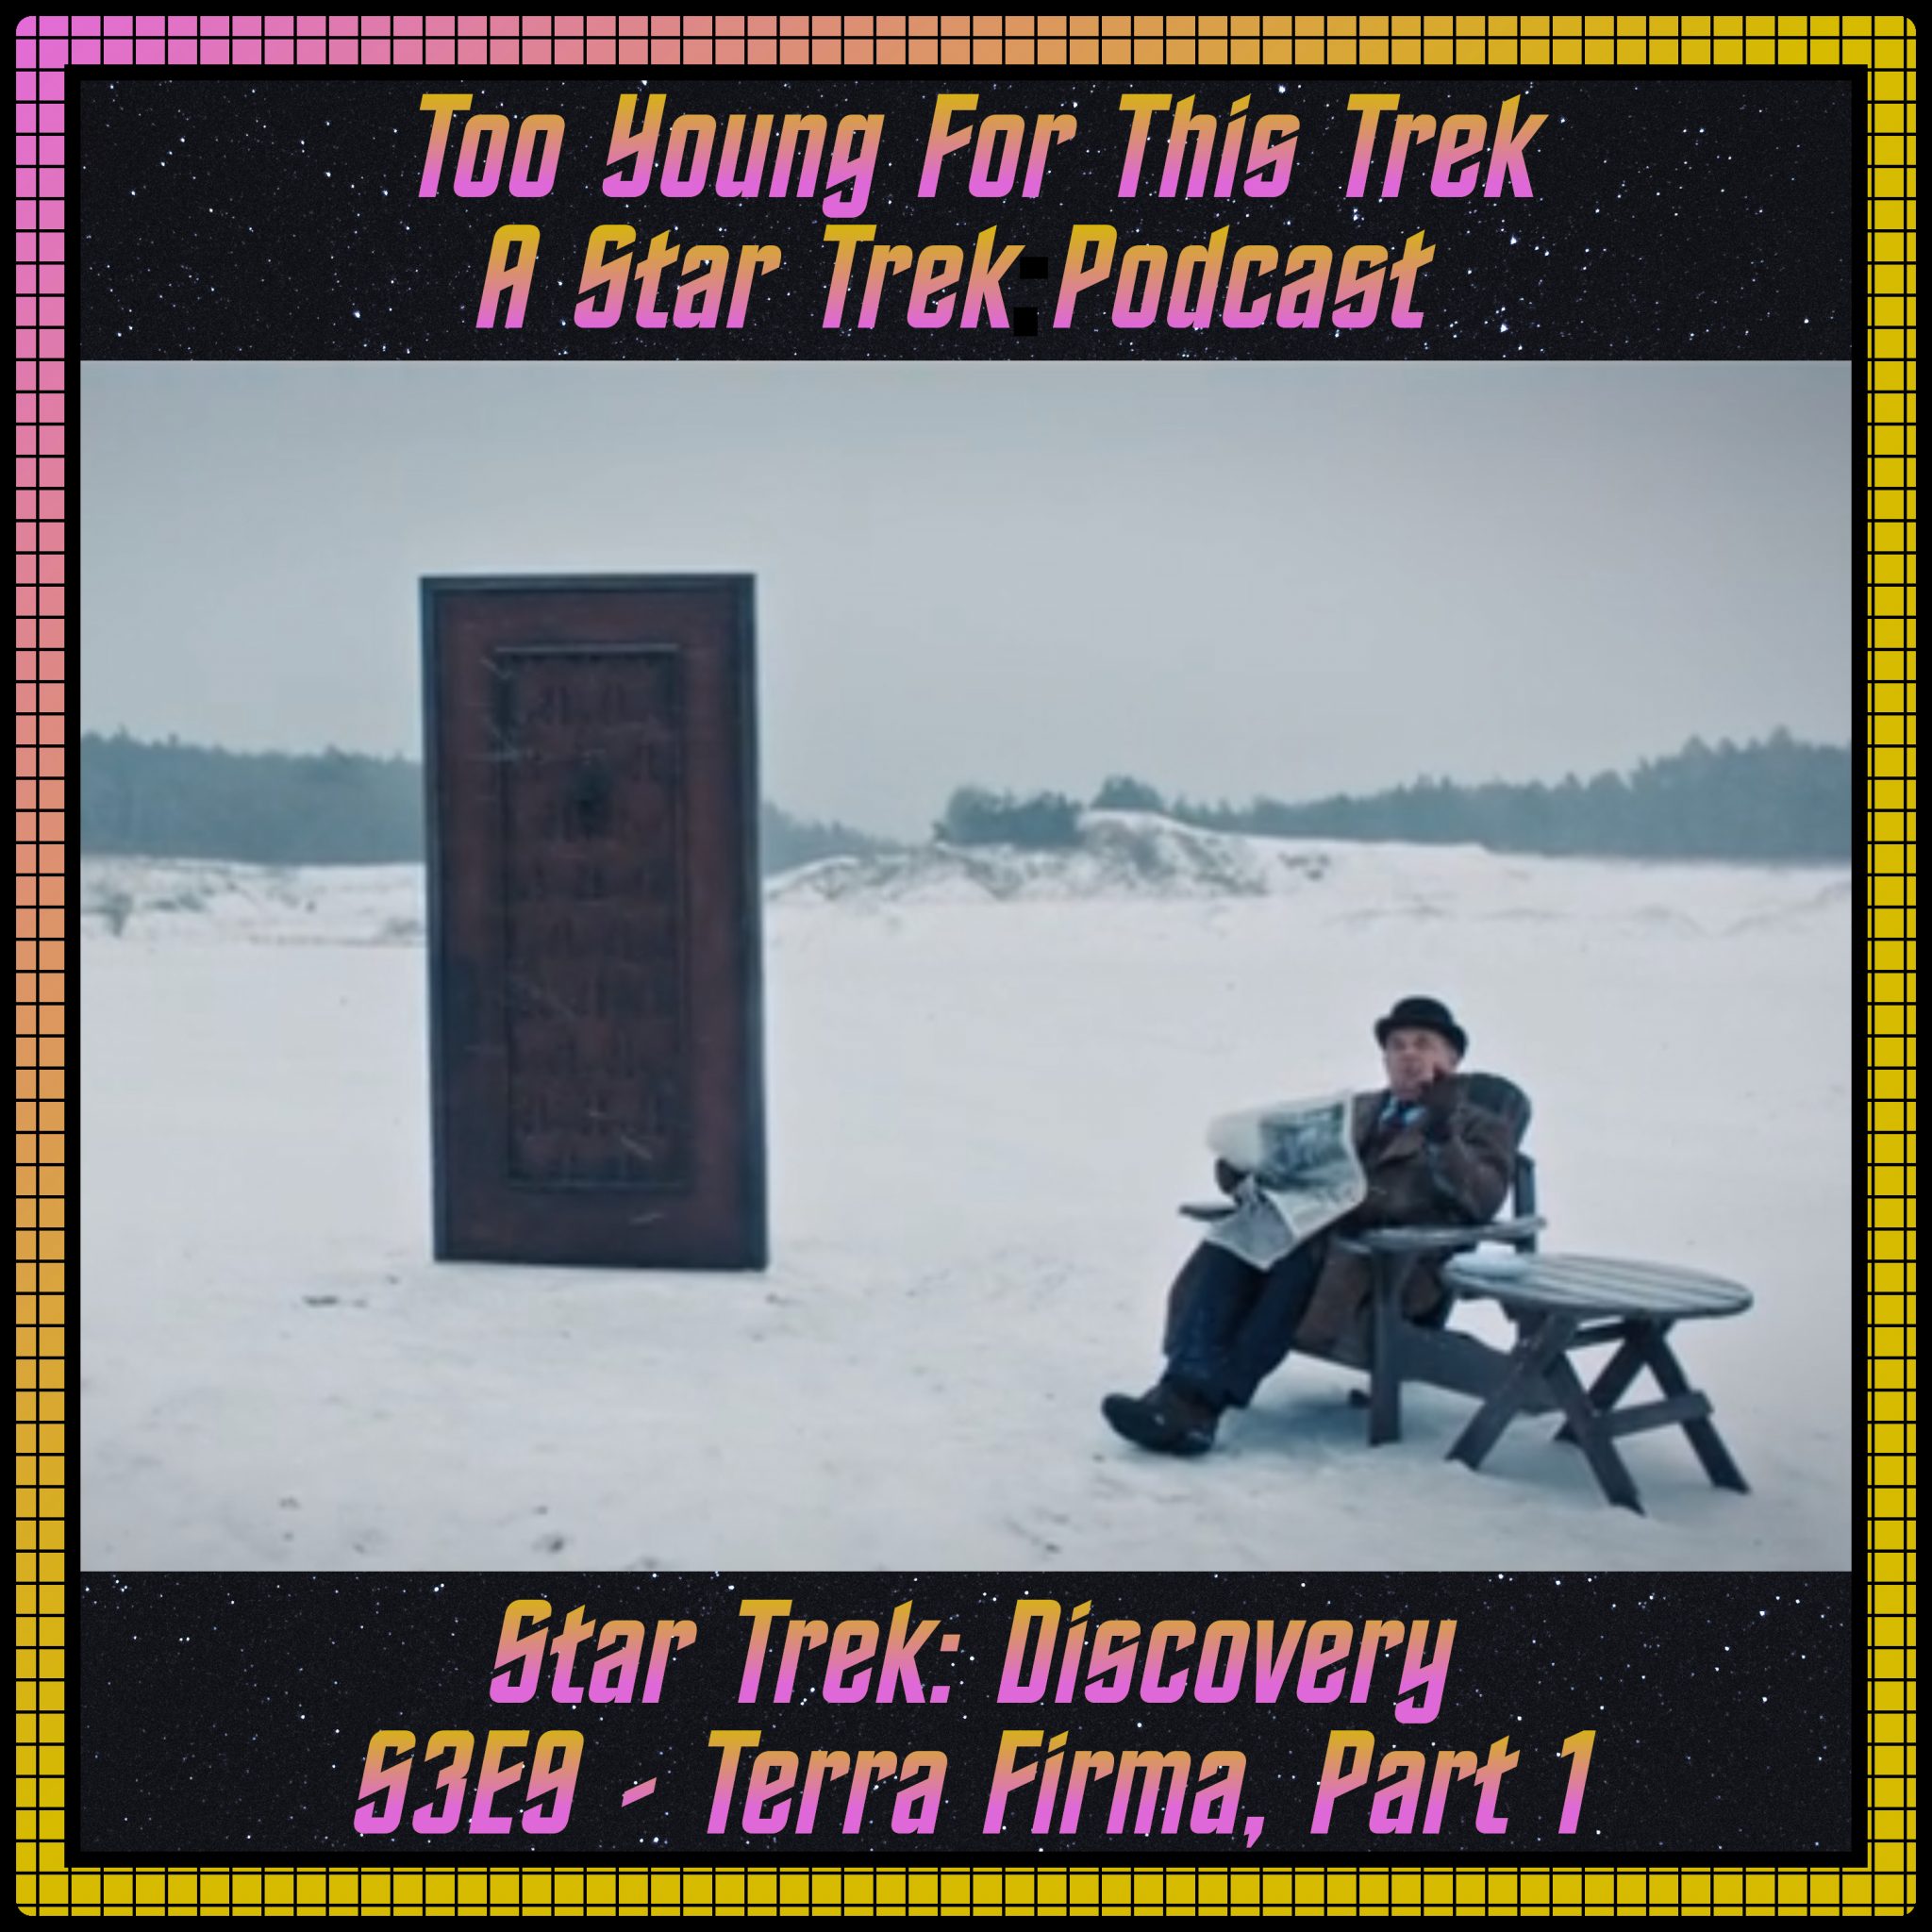 Star Trek: Discovery S3E9 - Terra Firma, Part 1